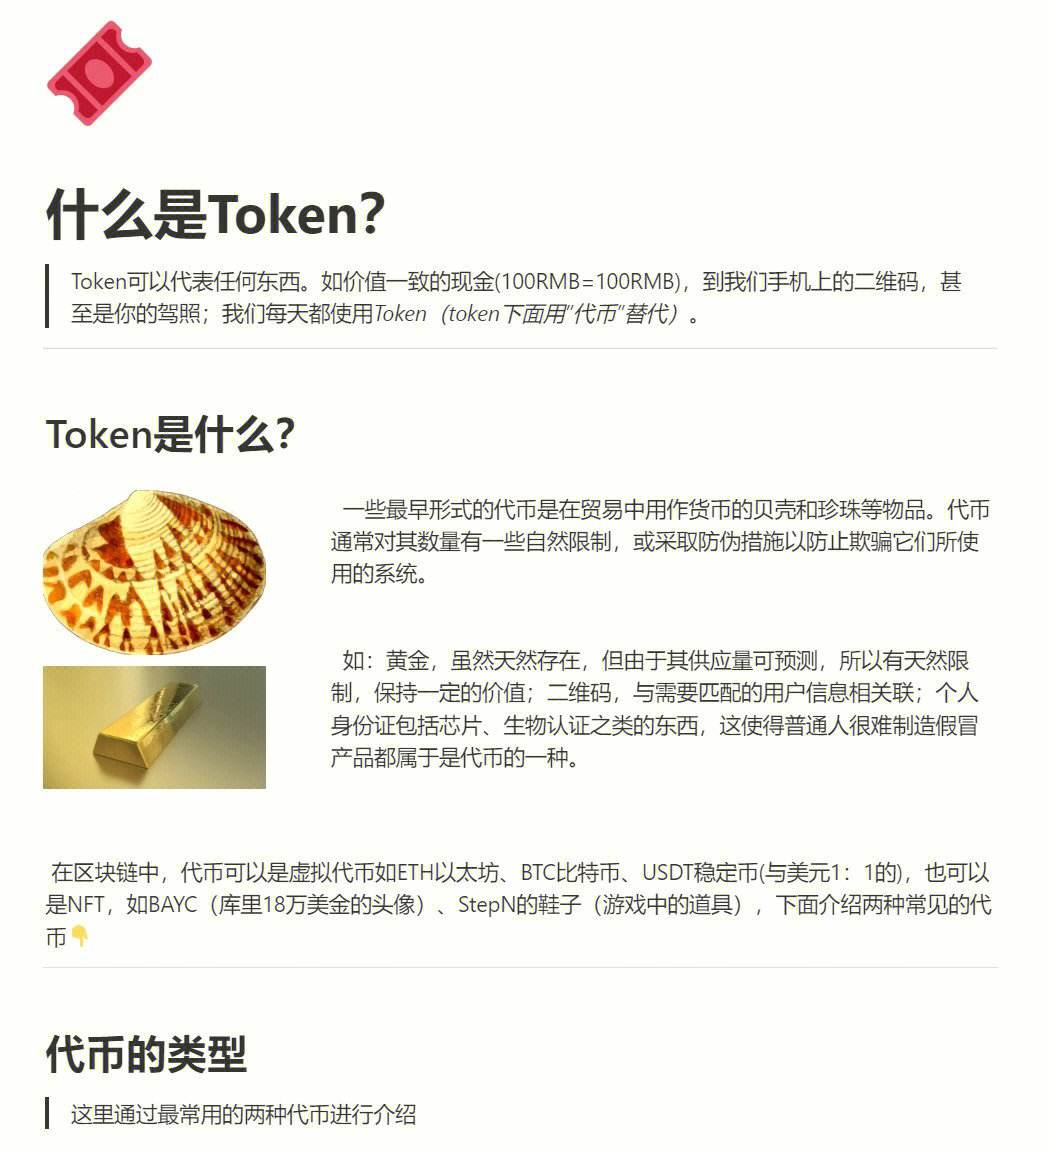 ITOKEN是什么意思、登录token是什么意思